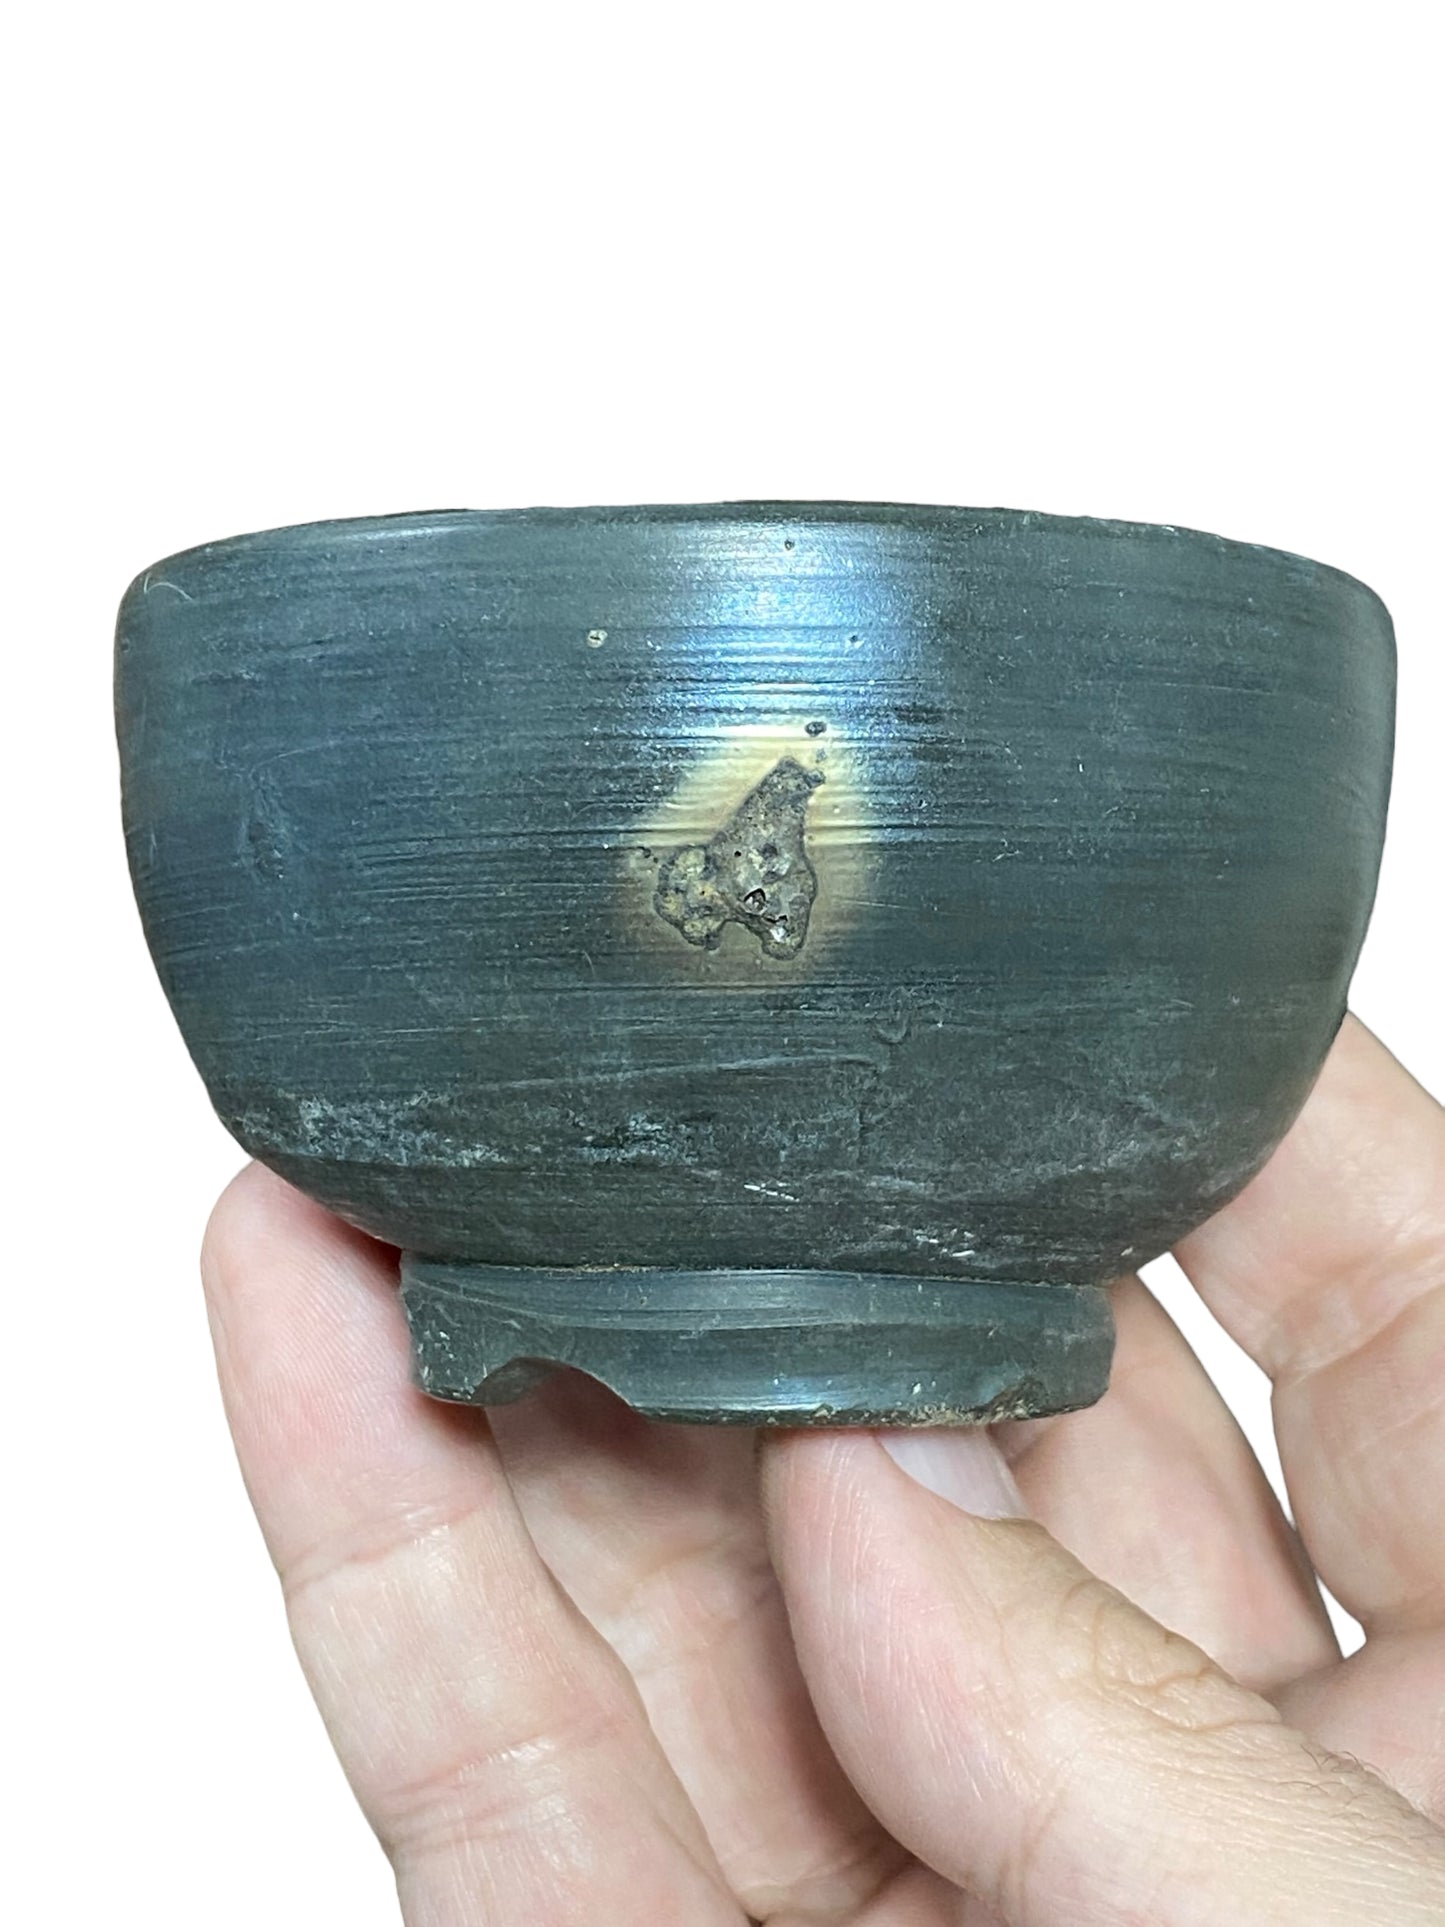 Deiju - Wood Fired Bowl Style Bonsai or Accent Pot